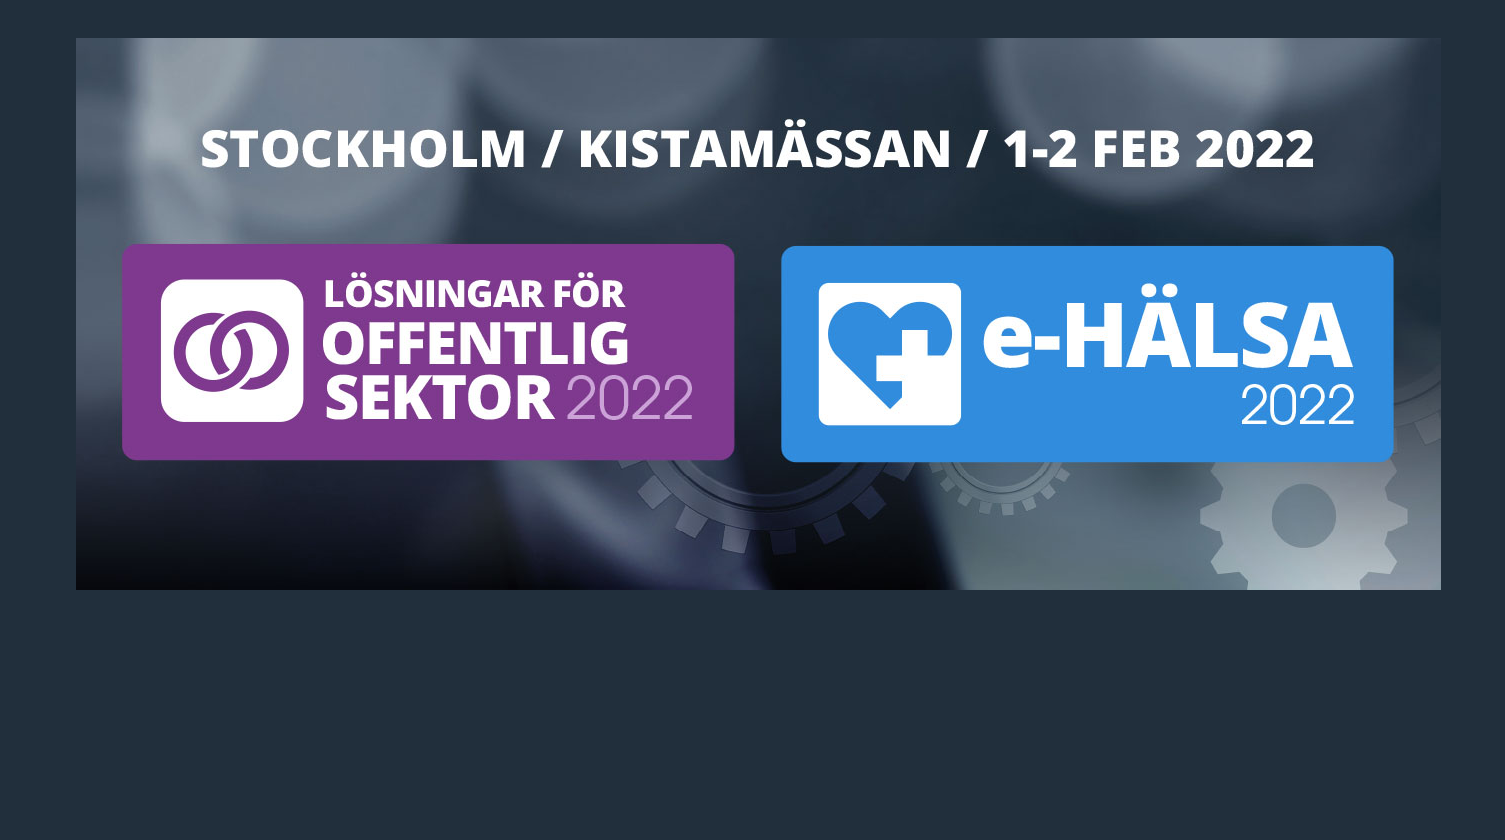 e-Hälsa 2022 STOCKHOLM / KISTAMÄSSAN / 1-2 FEB